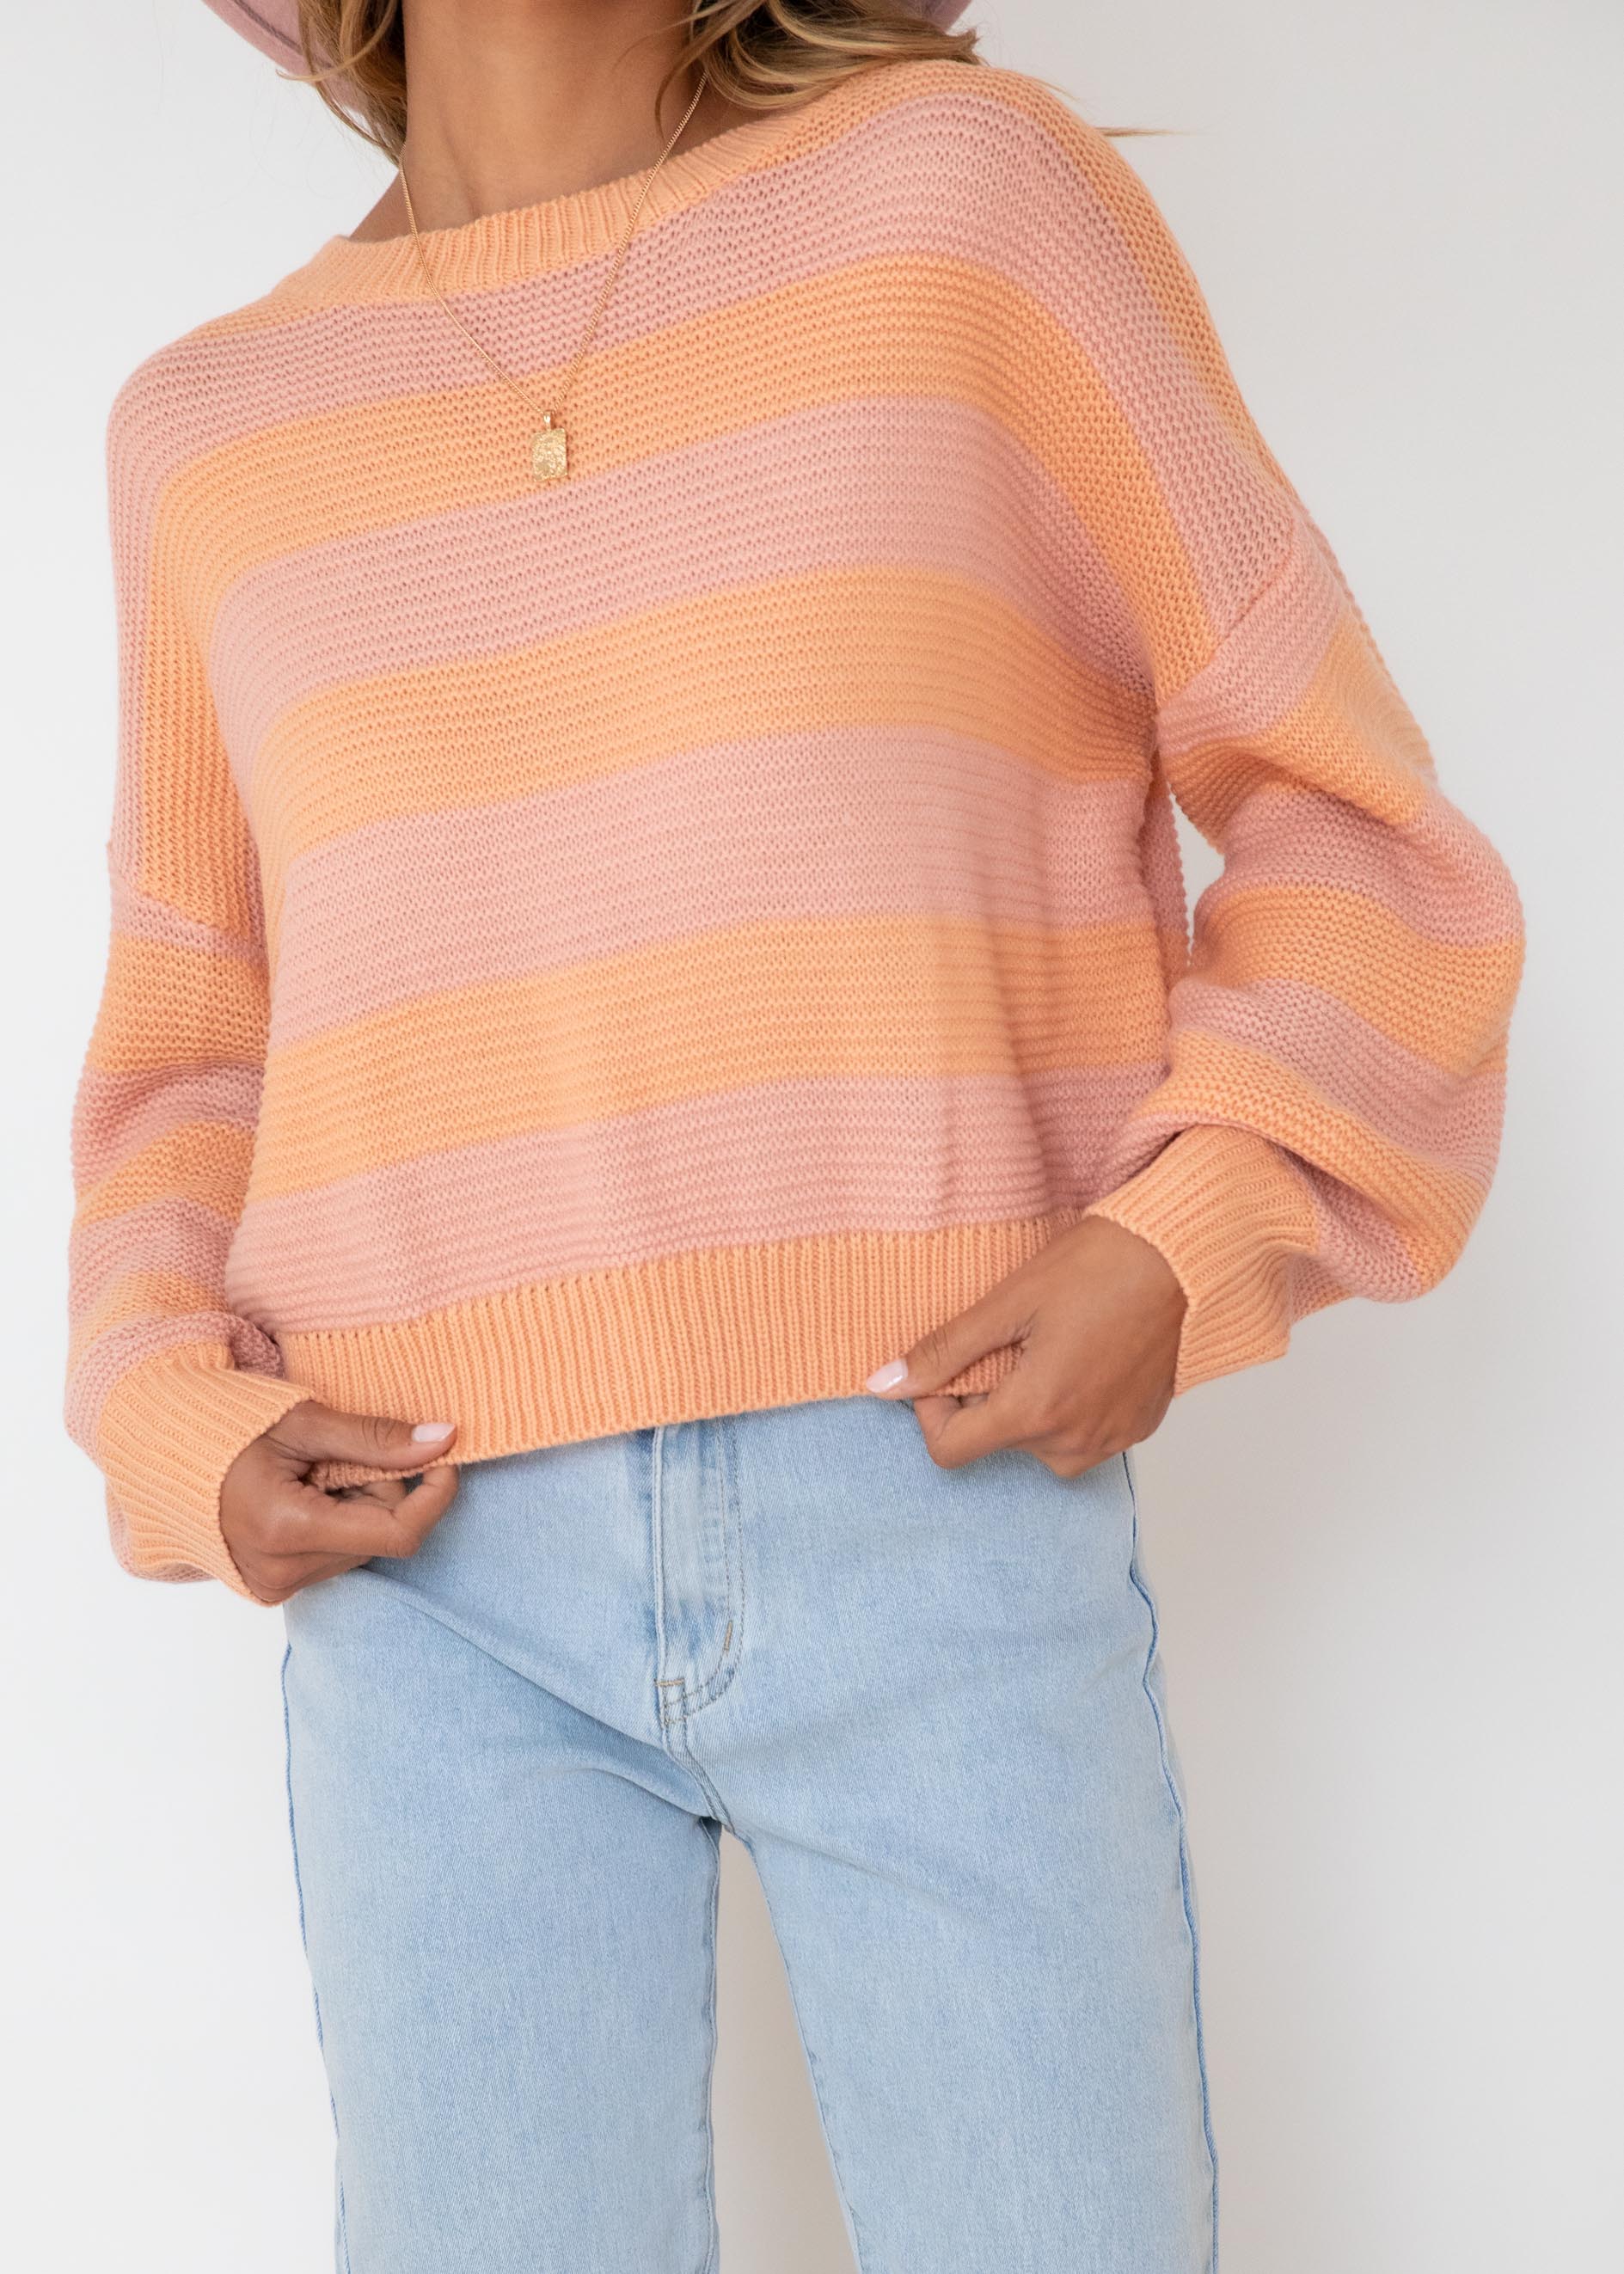 True Story Sweater - Peach Stripe